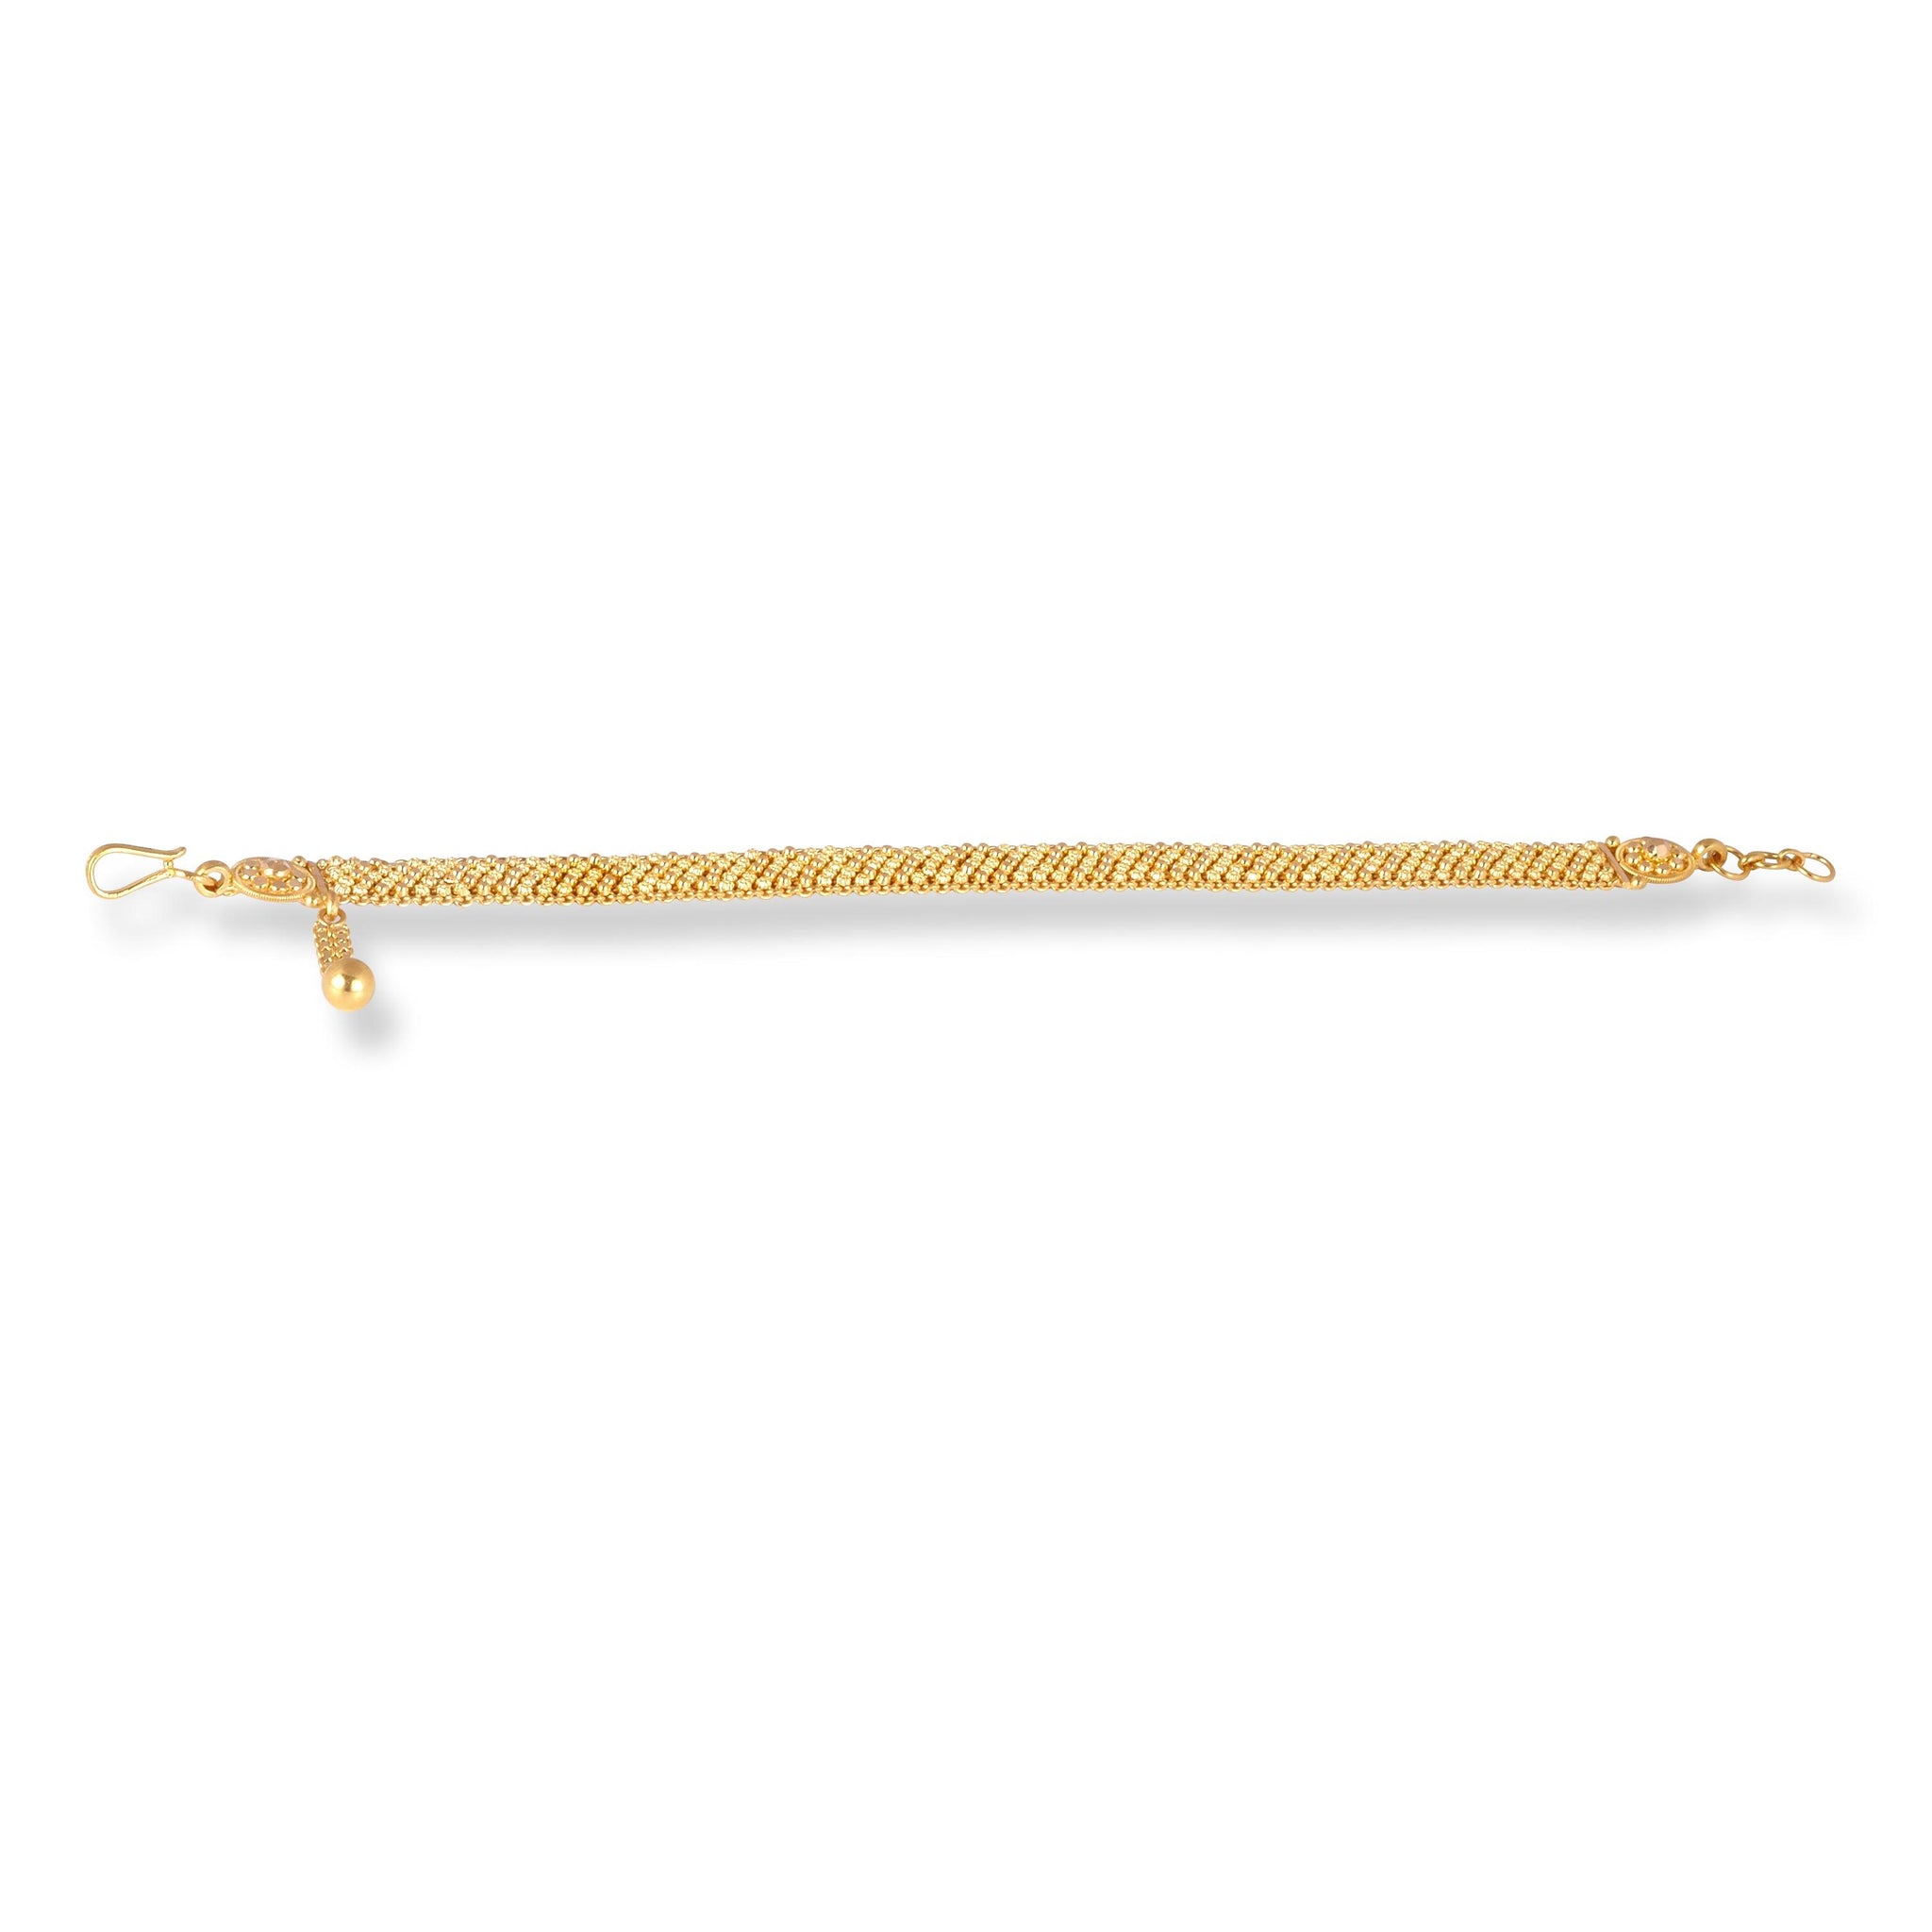 22ct Gold Ladies Bracelet in Filigree Work Design with U-Hook Clasp LBR-7148